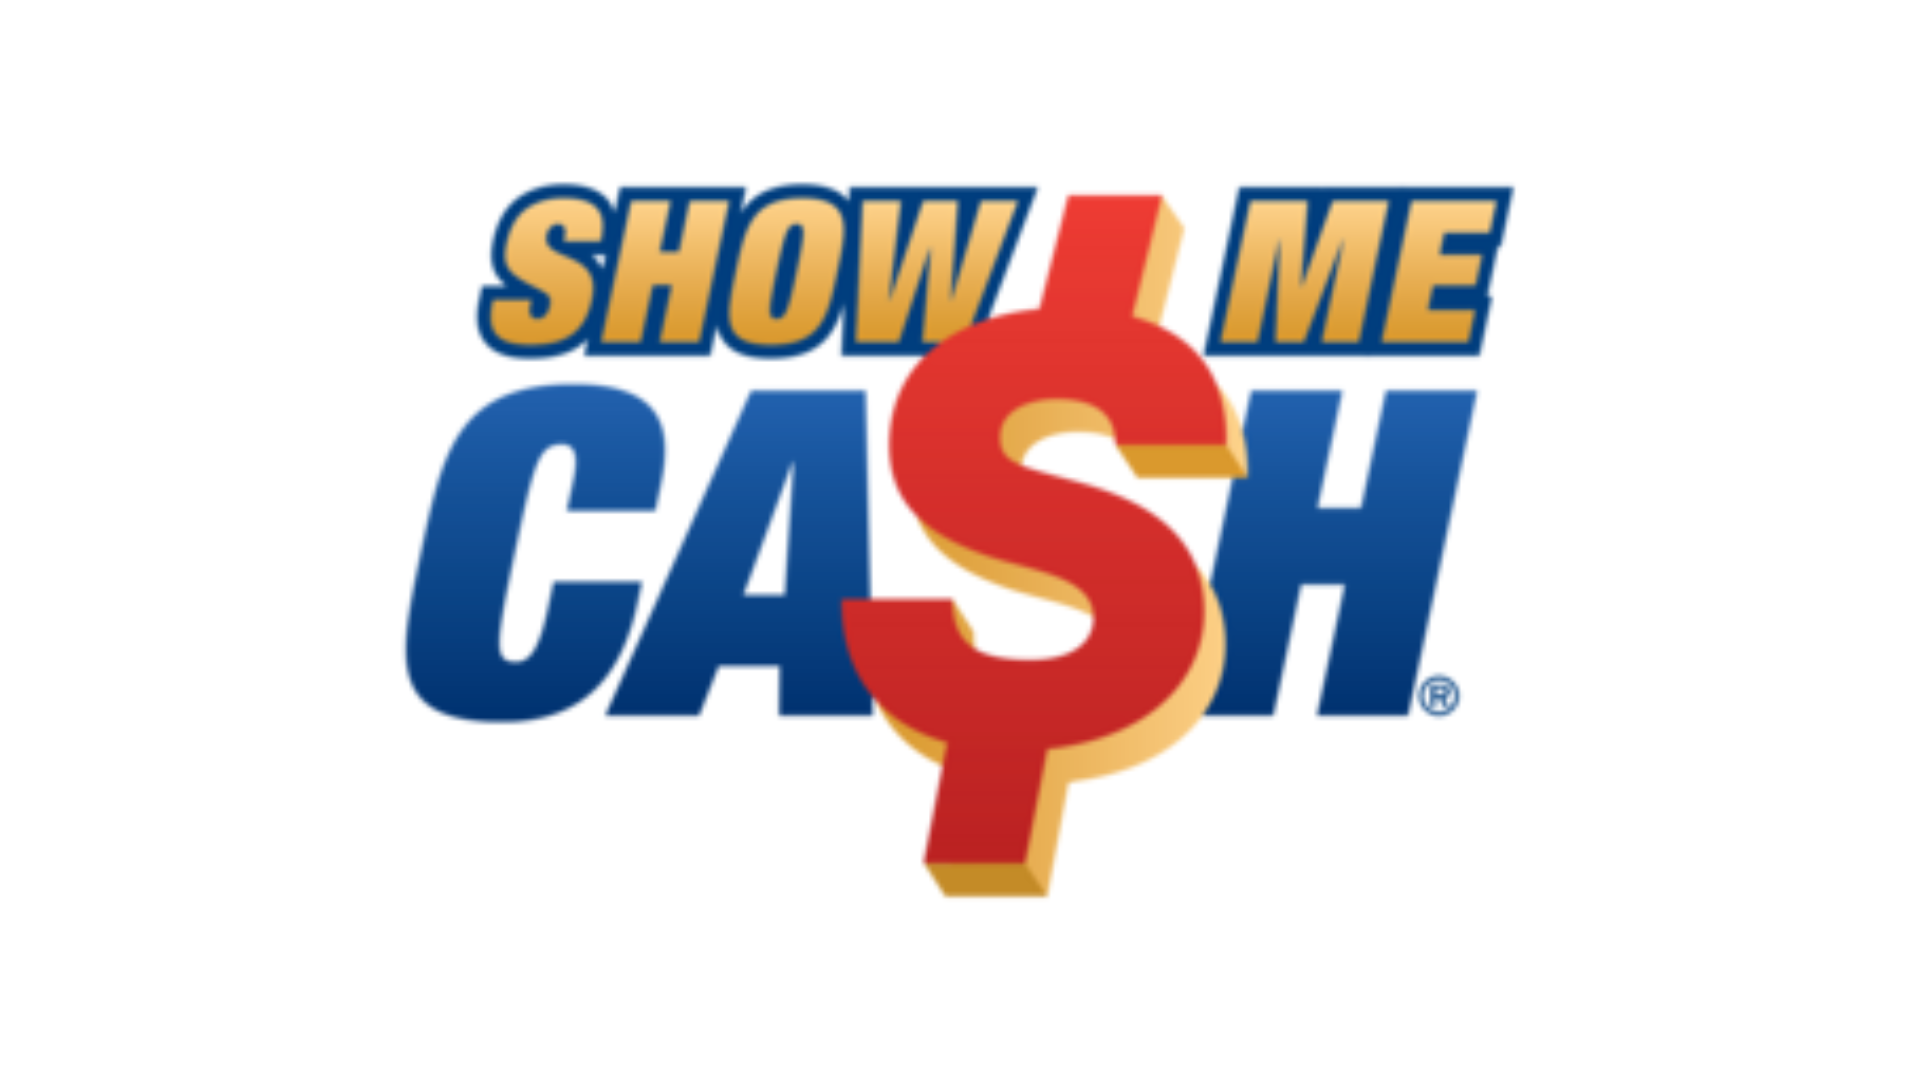 $100,000 Show Me Cash Jackpot Winner 'Tickled' by Win